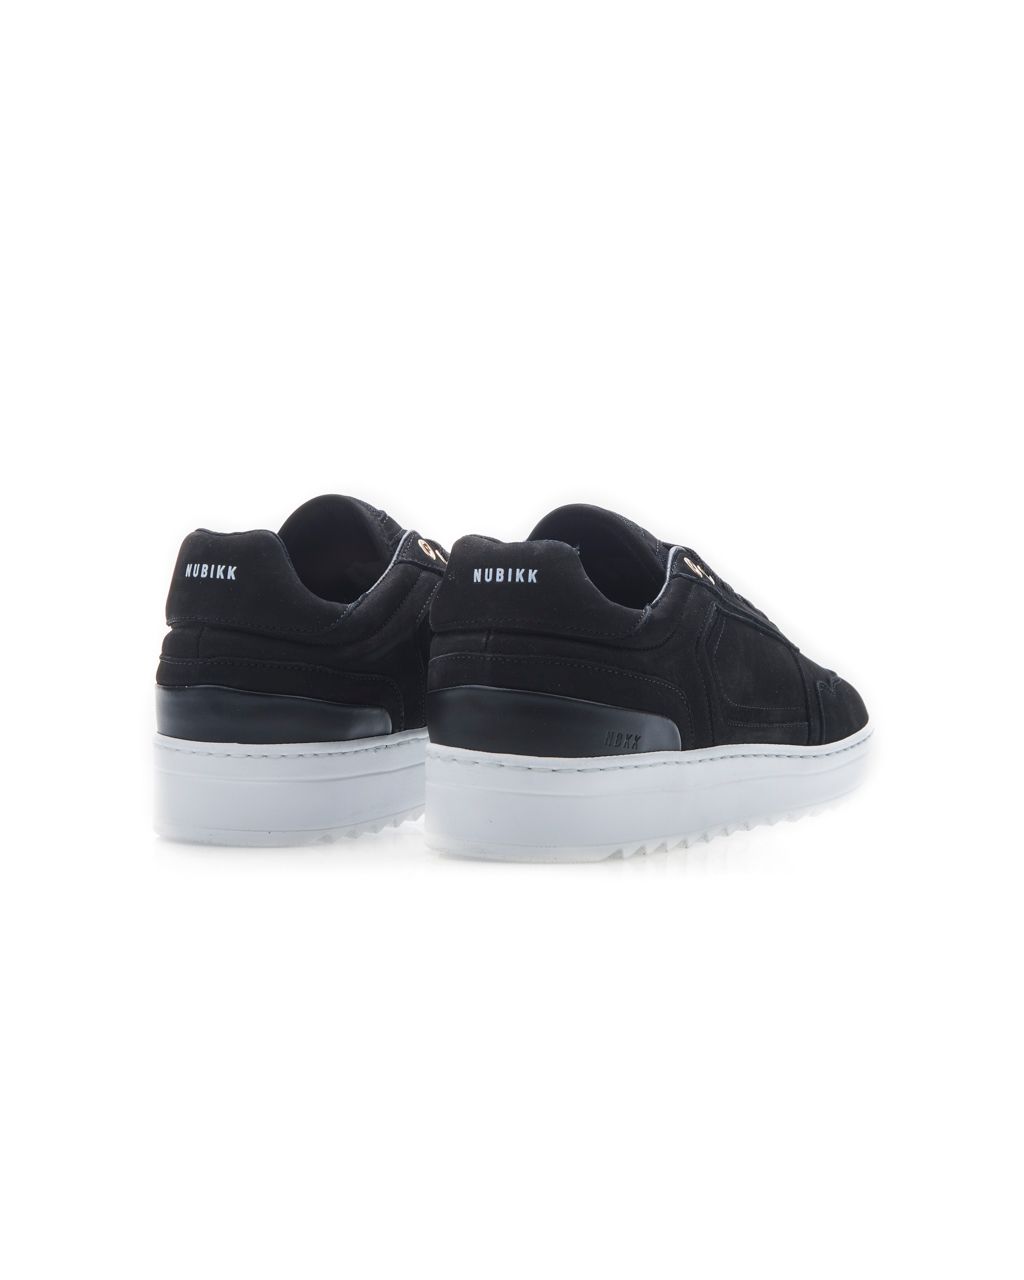 Nubikk Cliff Cane  Sneakers Zwart 077088-001-40